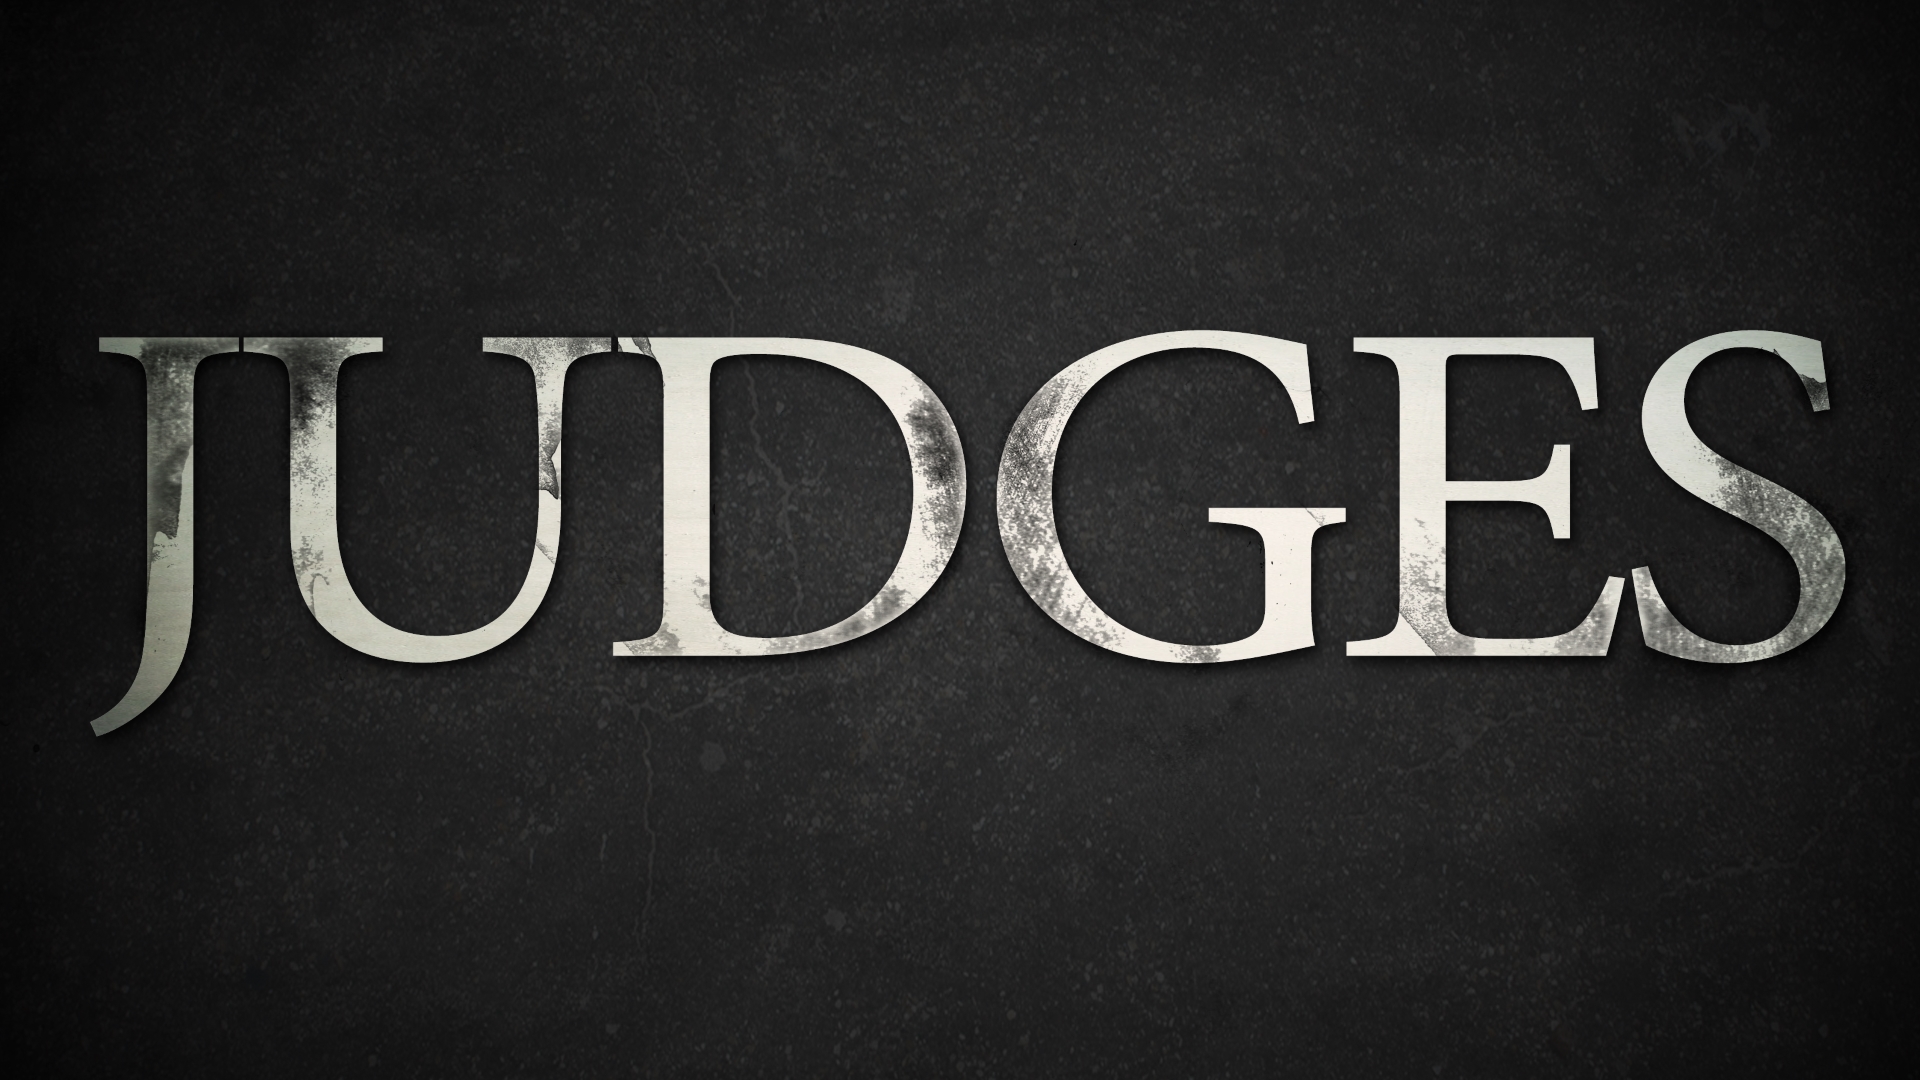 judges-banner-1920-1080.jpg